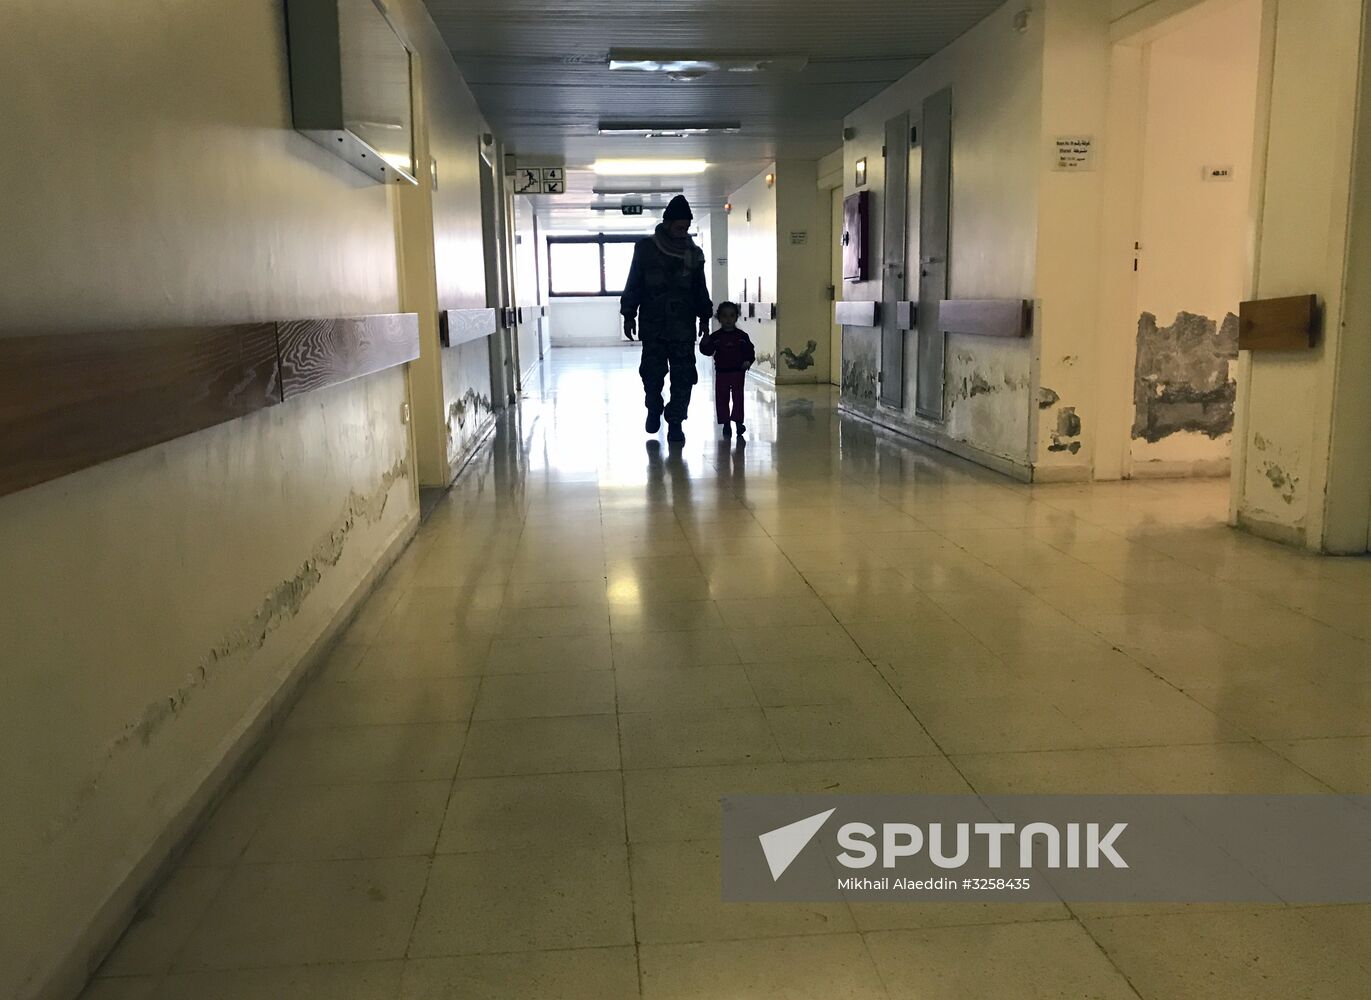 Children's unit of Tishreen Hospital in Latakia, Syria